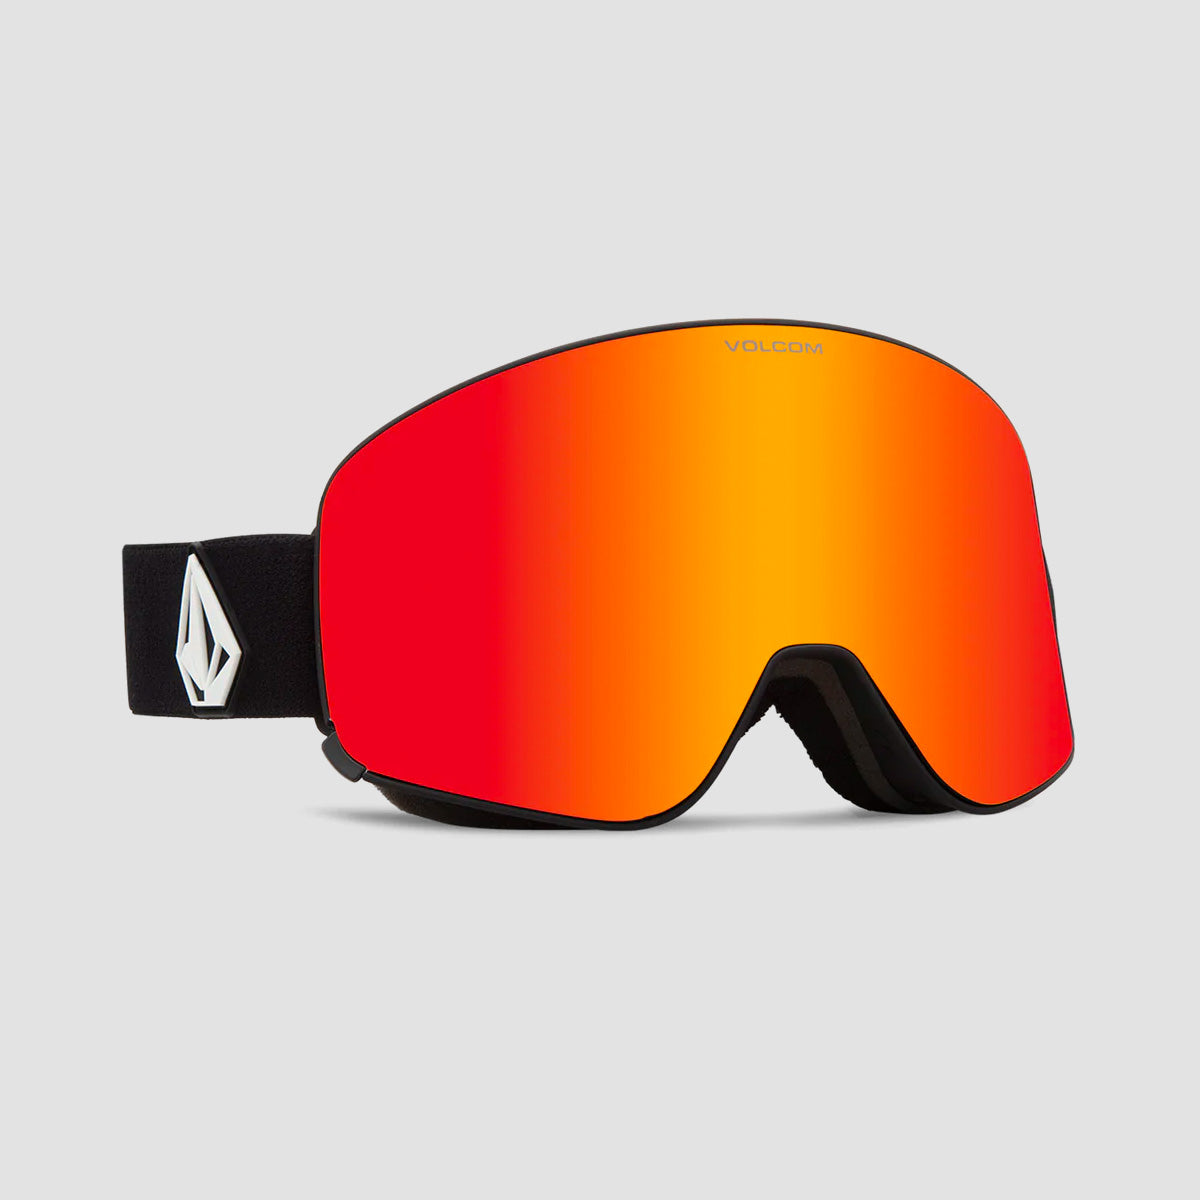 Volcom Odyssey Snow Goggles Matte Black/Red Chrome + Bonus Lens Yellow